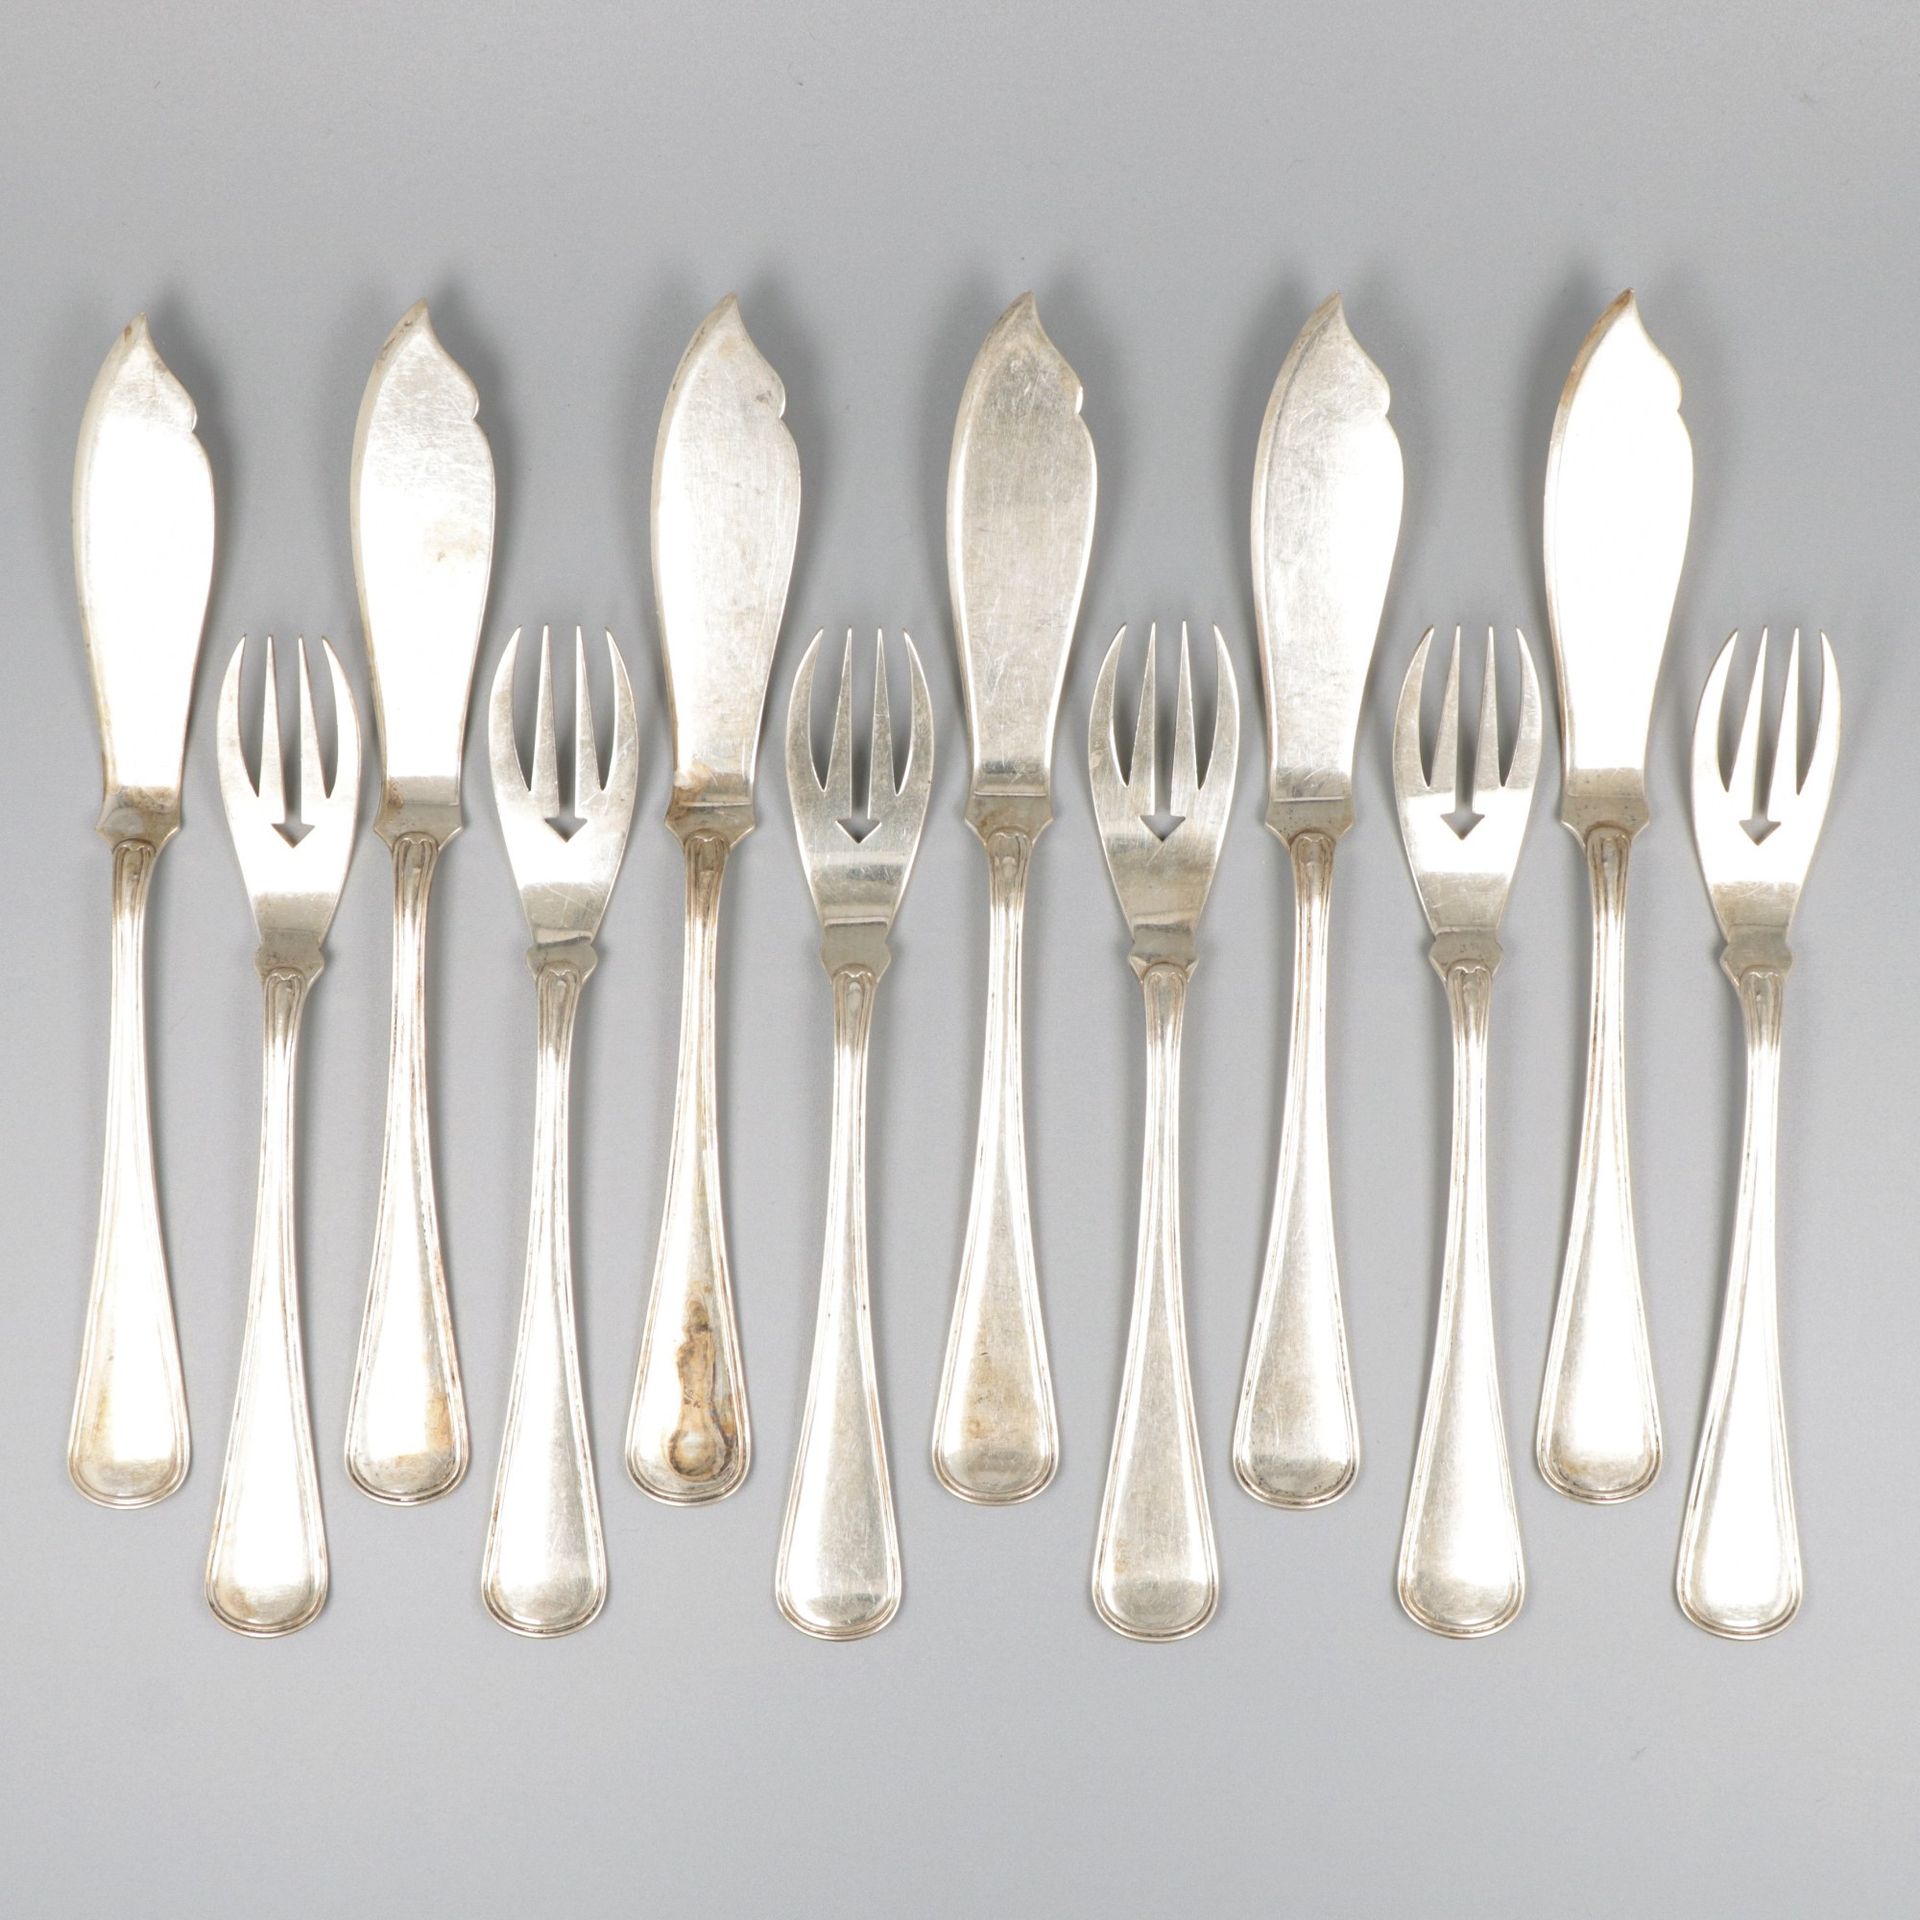 12-piece fish cutlery set silver. "Hollands Rondfilet "或荷兰圆形锉刀，有双刃。荷兰，Schoonhove&hellip;